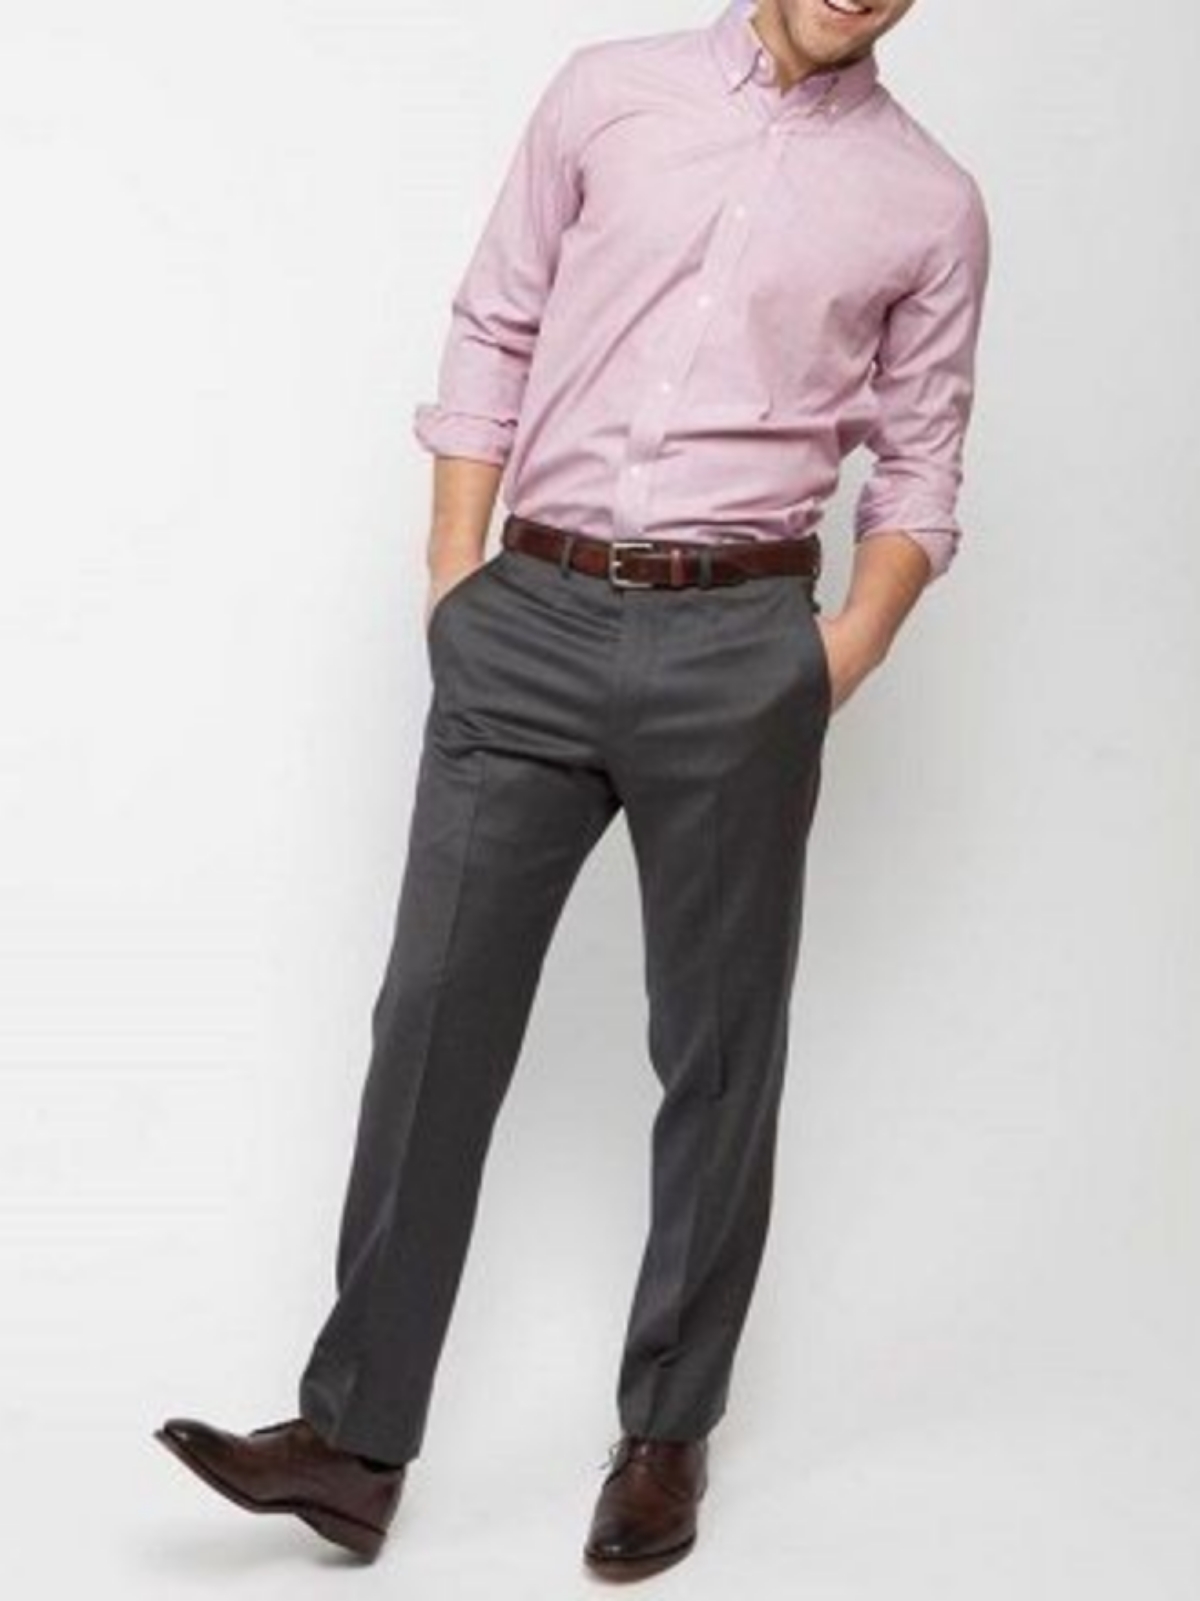 Pink shirt with dark grey pants